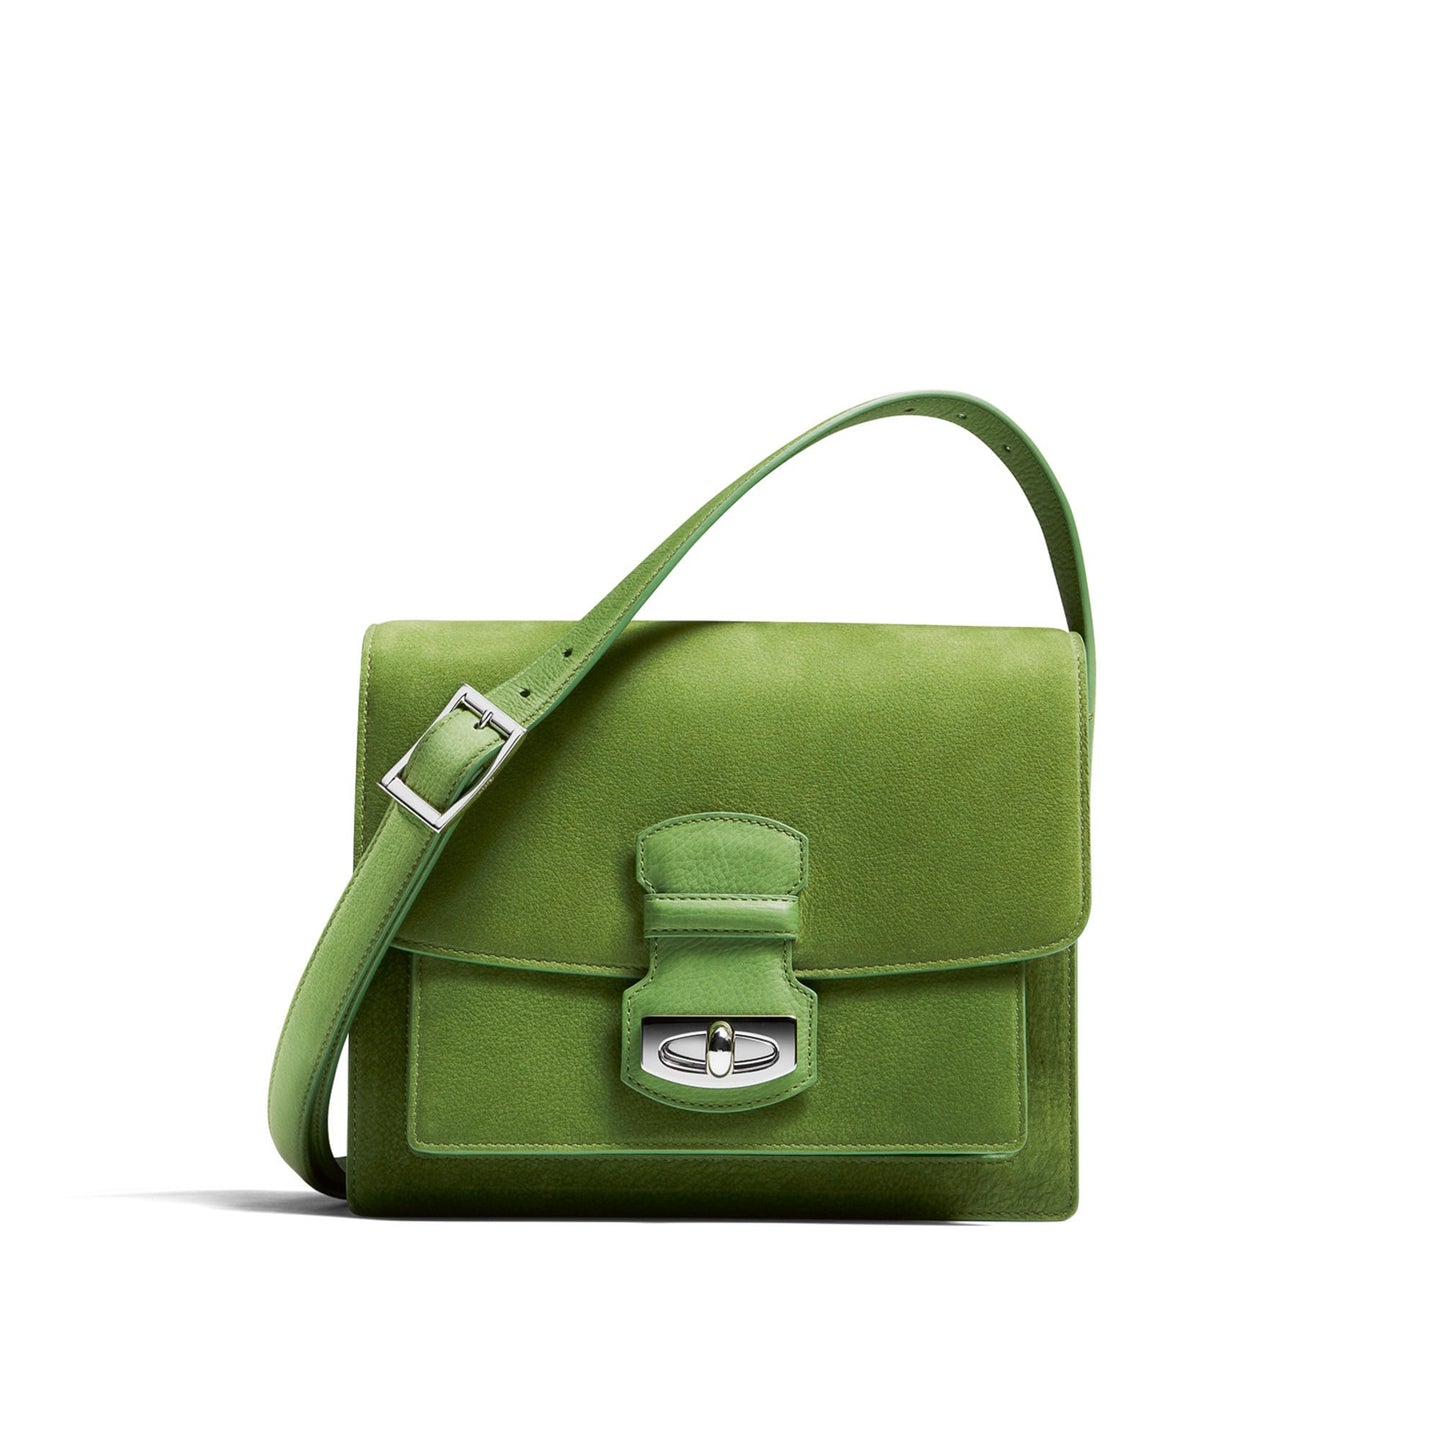 Wiltshire Square Handbag in Soft Grain Leather